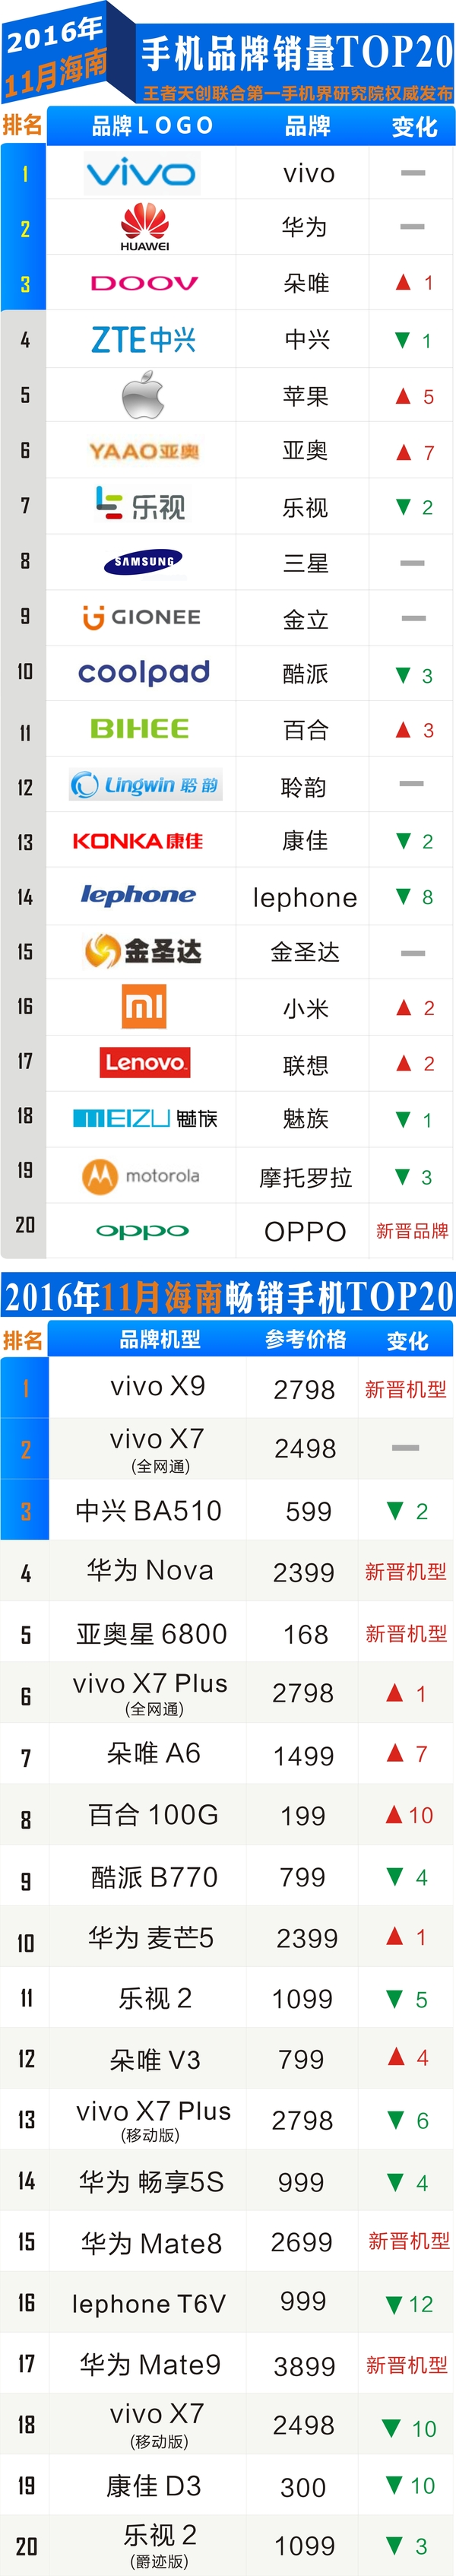 vivo X7让座，vivo X9领先十一月海南省热销手机行业